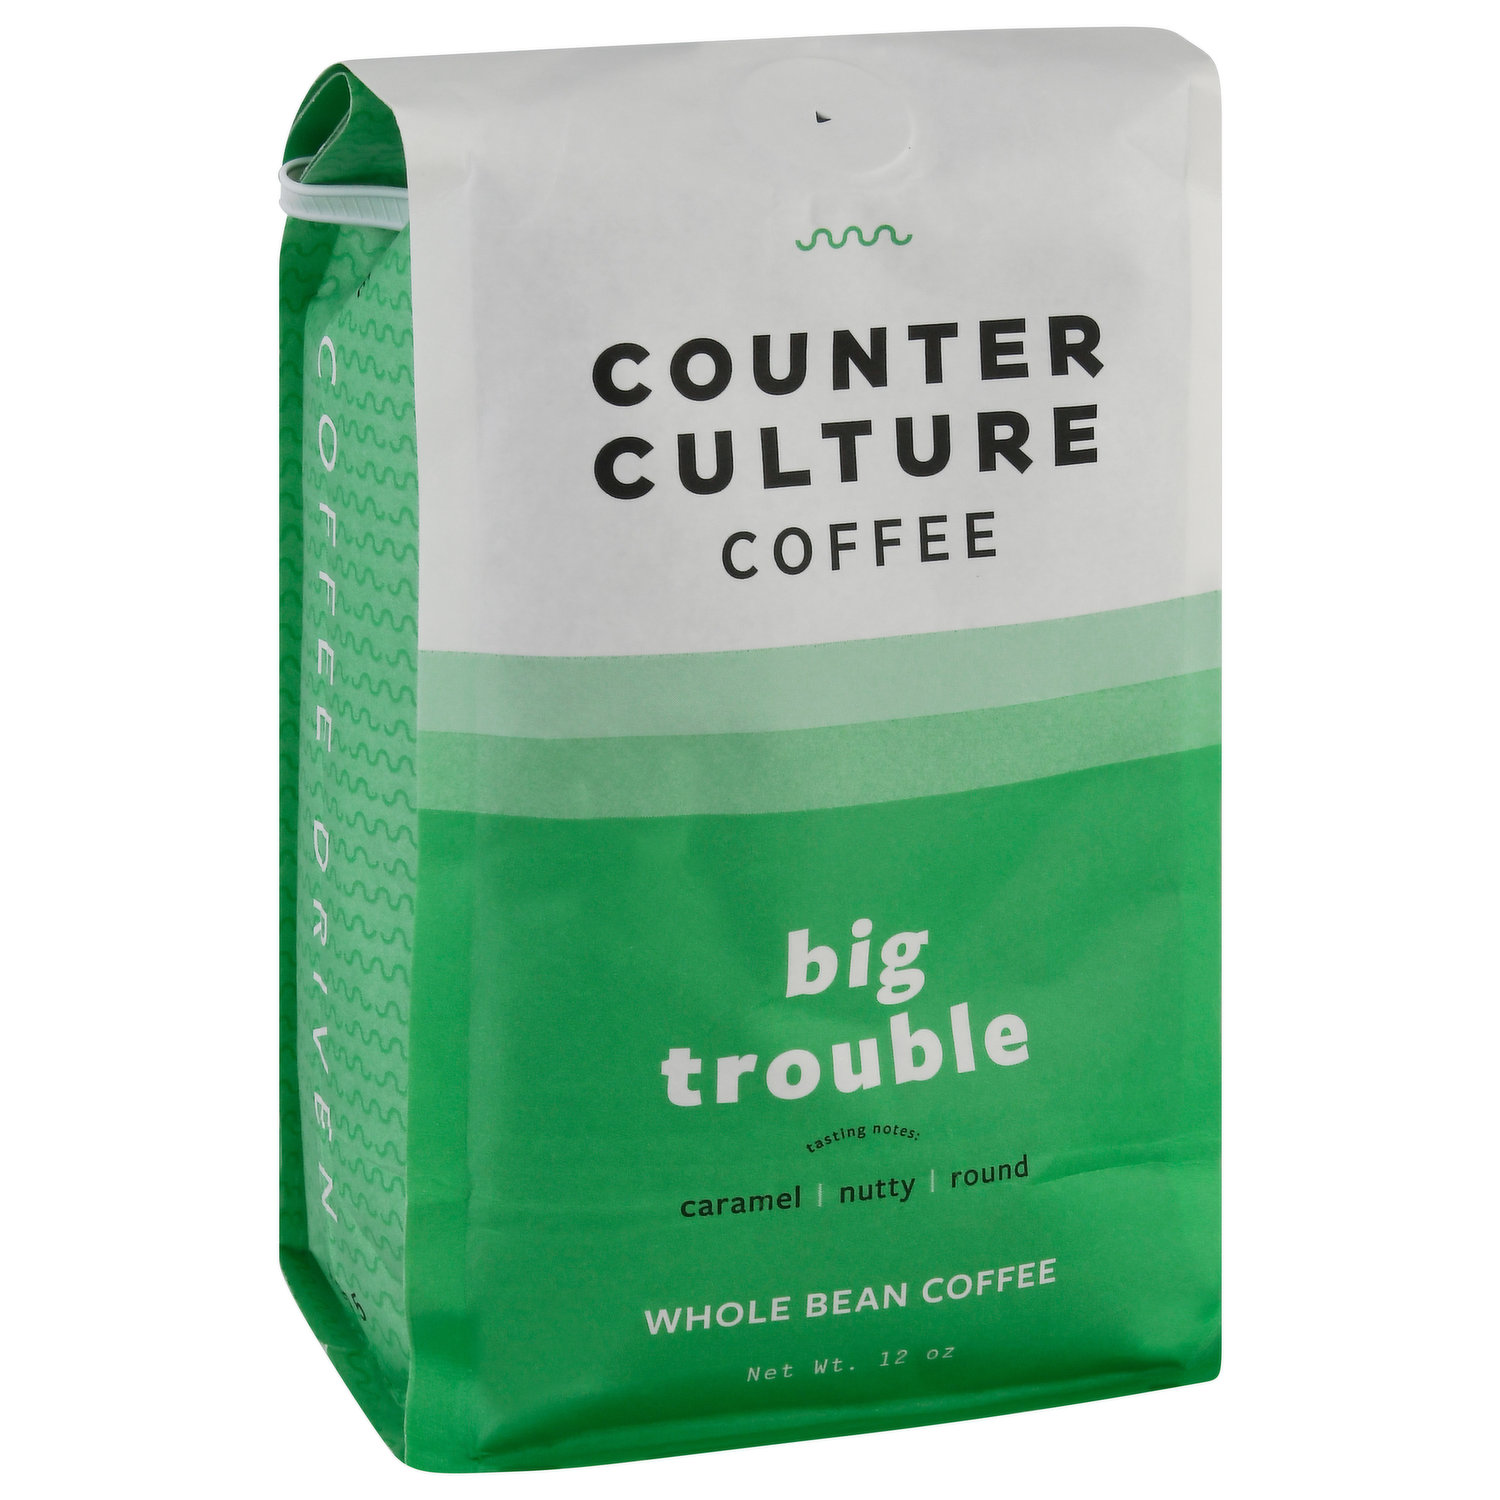 Counter Culture Coffee - Big Trouble Blend - Whole Bean Coffee - Freshly Roasted Coffee Beans - Medium Dark Roast - Nutty, Caramel, Chocolate